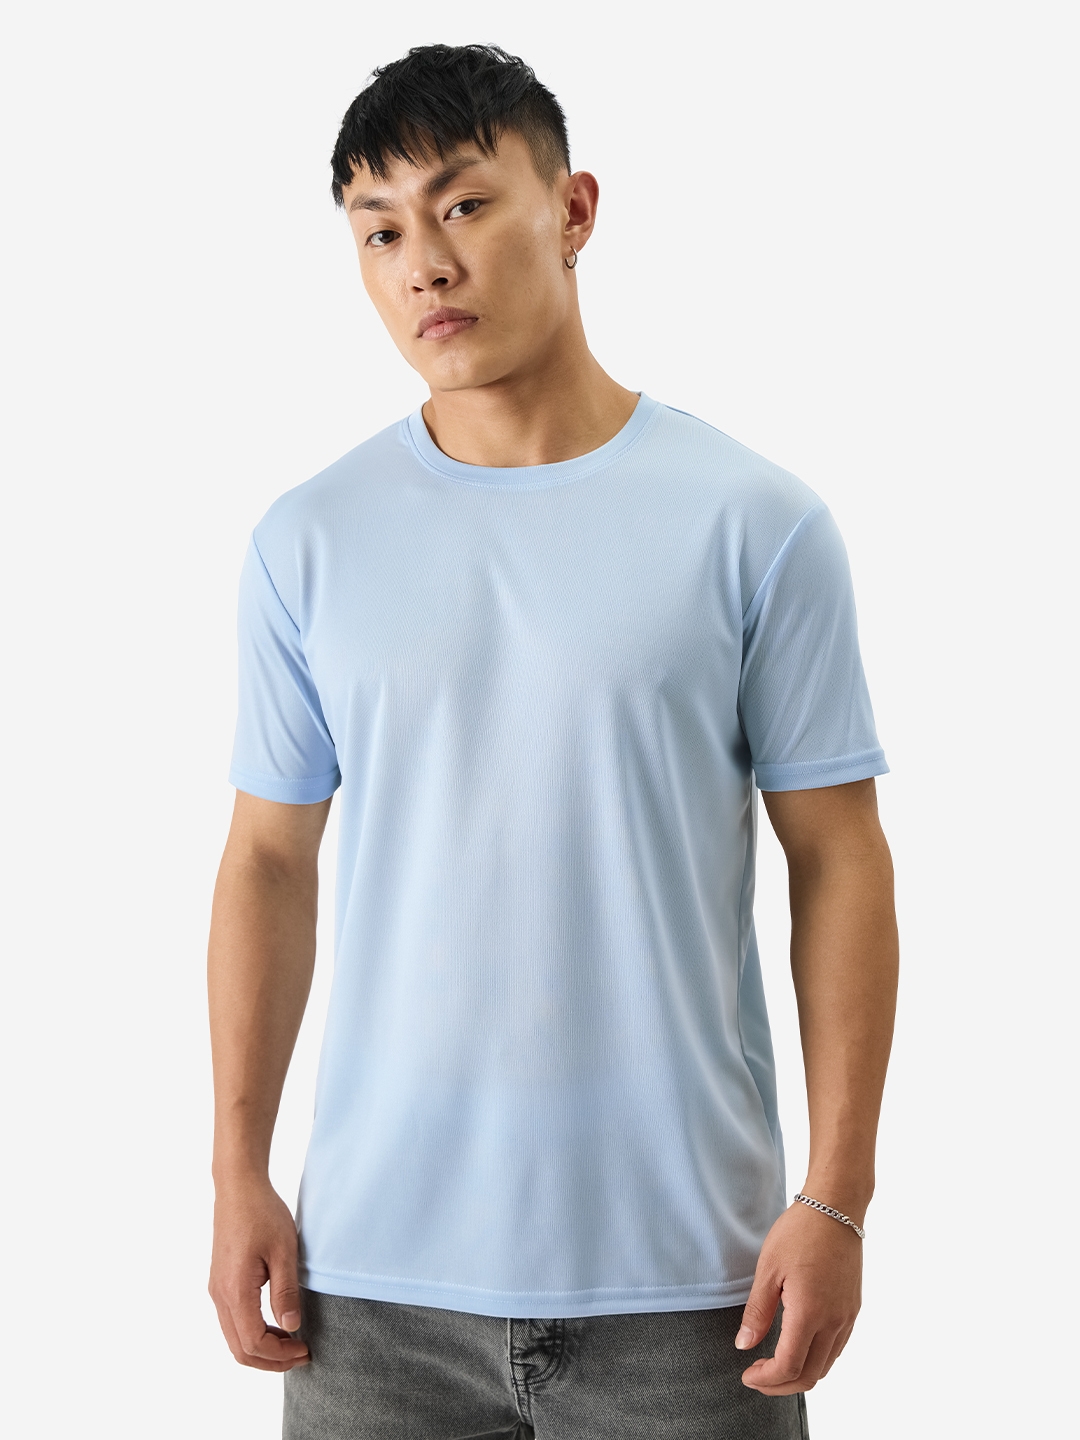 Men's Solid: Snow Blue T-Shirts